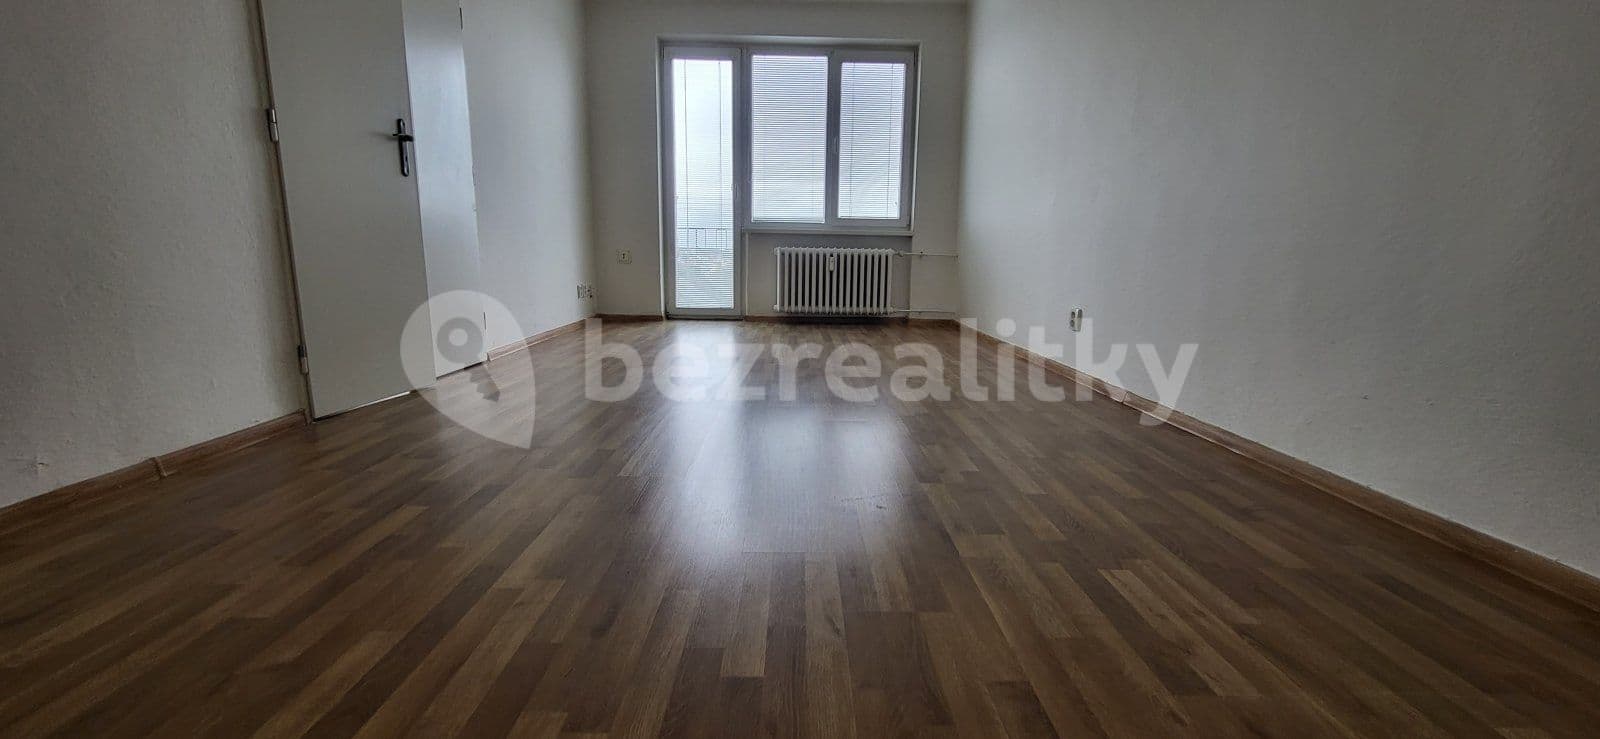 Prenájom bytu 3-izbový 60 m², Na Nábřeží, Havířov, Moravskoslezský kraj